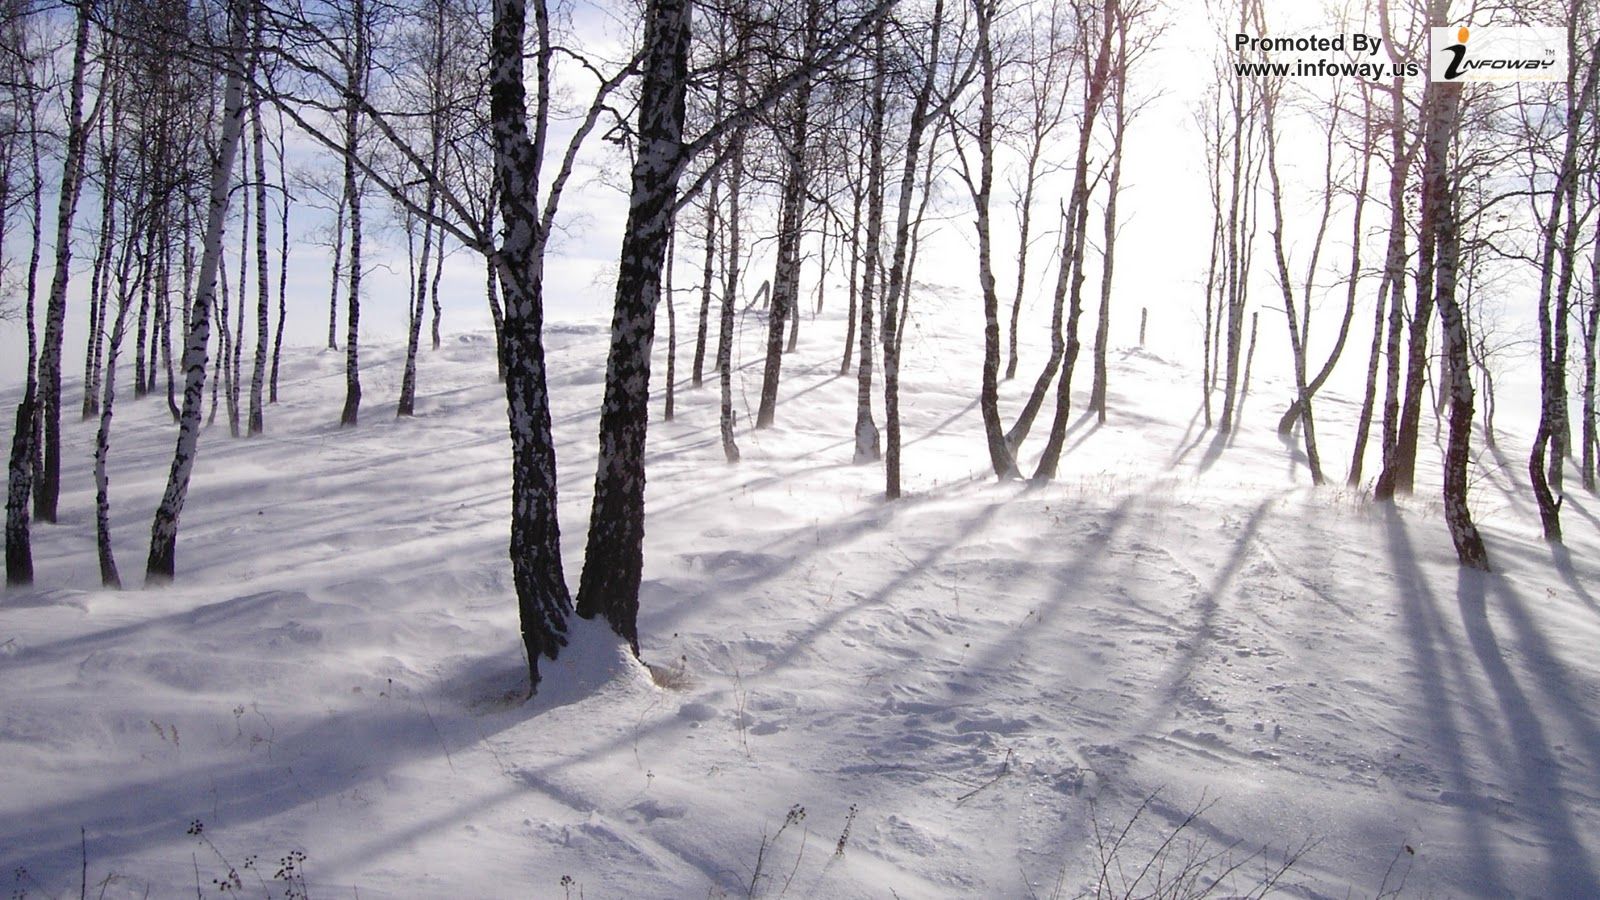 Winter Hd Images - Photo 57 of 331 | phombo.com